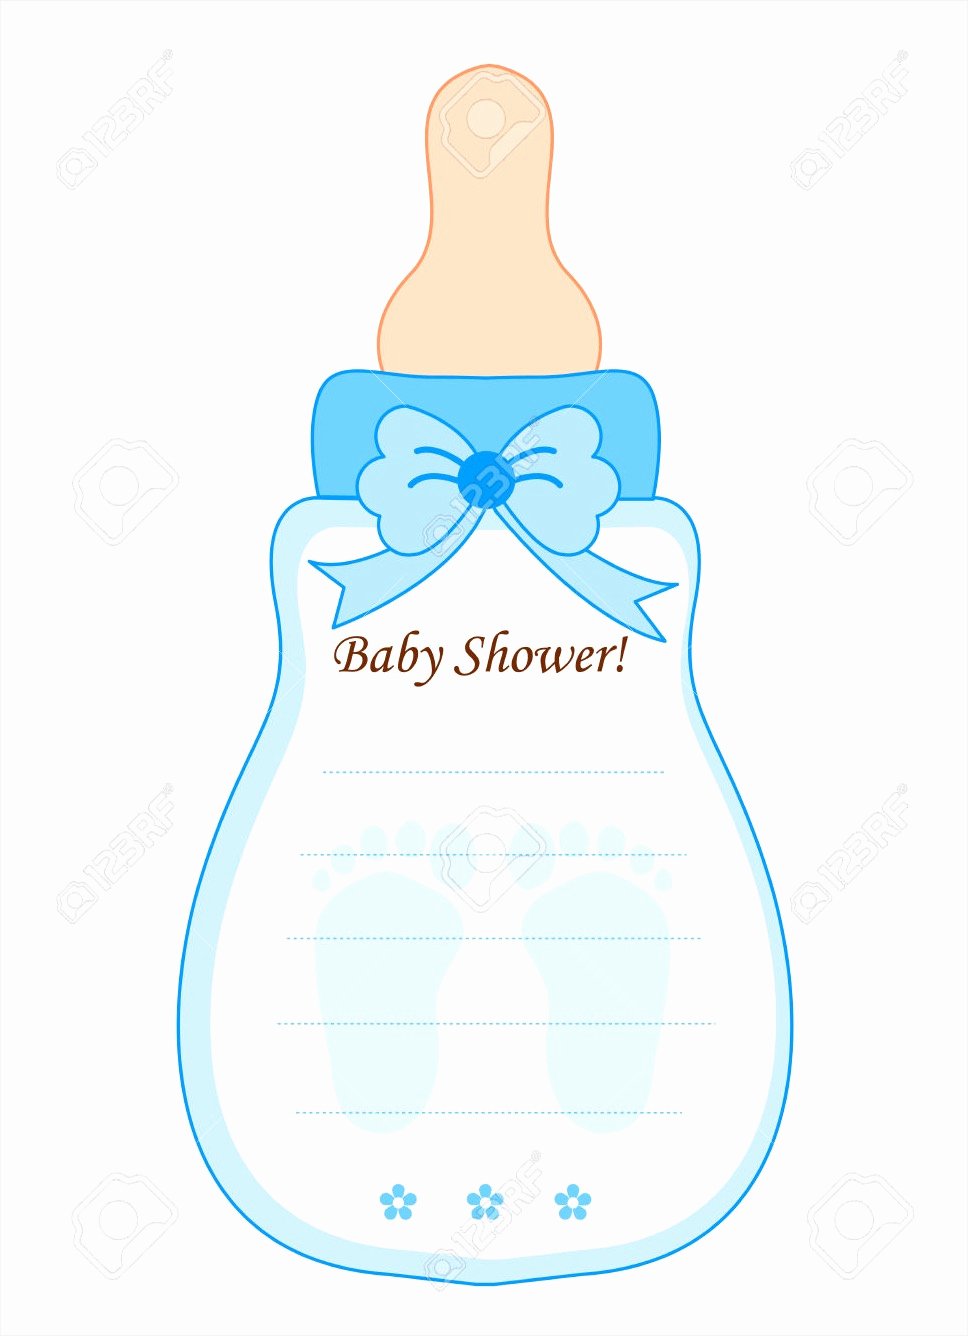 Baby Shower Programs Template Luxury Similiar Baby Shower Programs Sample Template Keywords